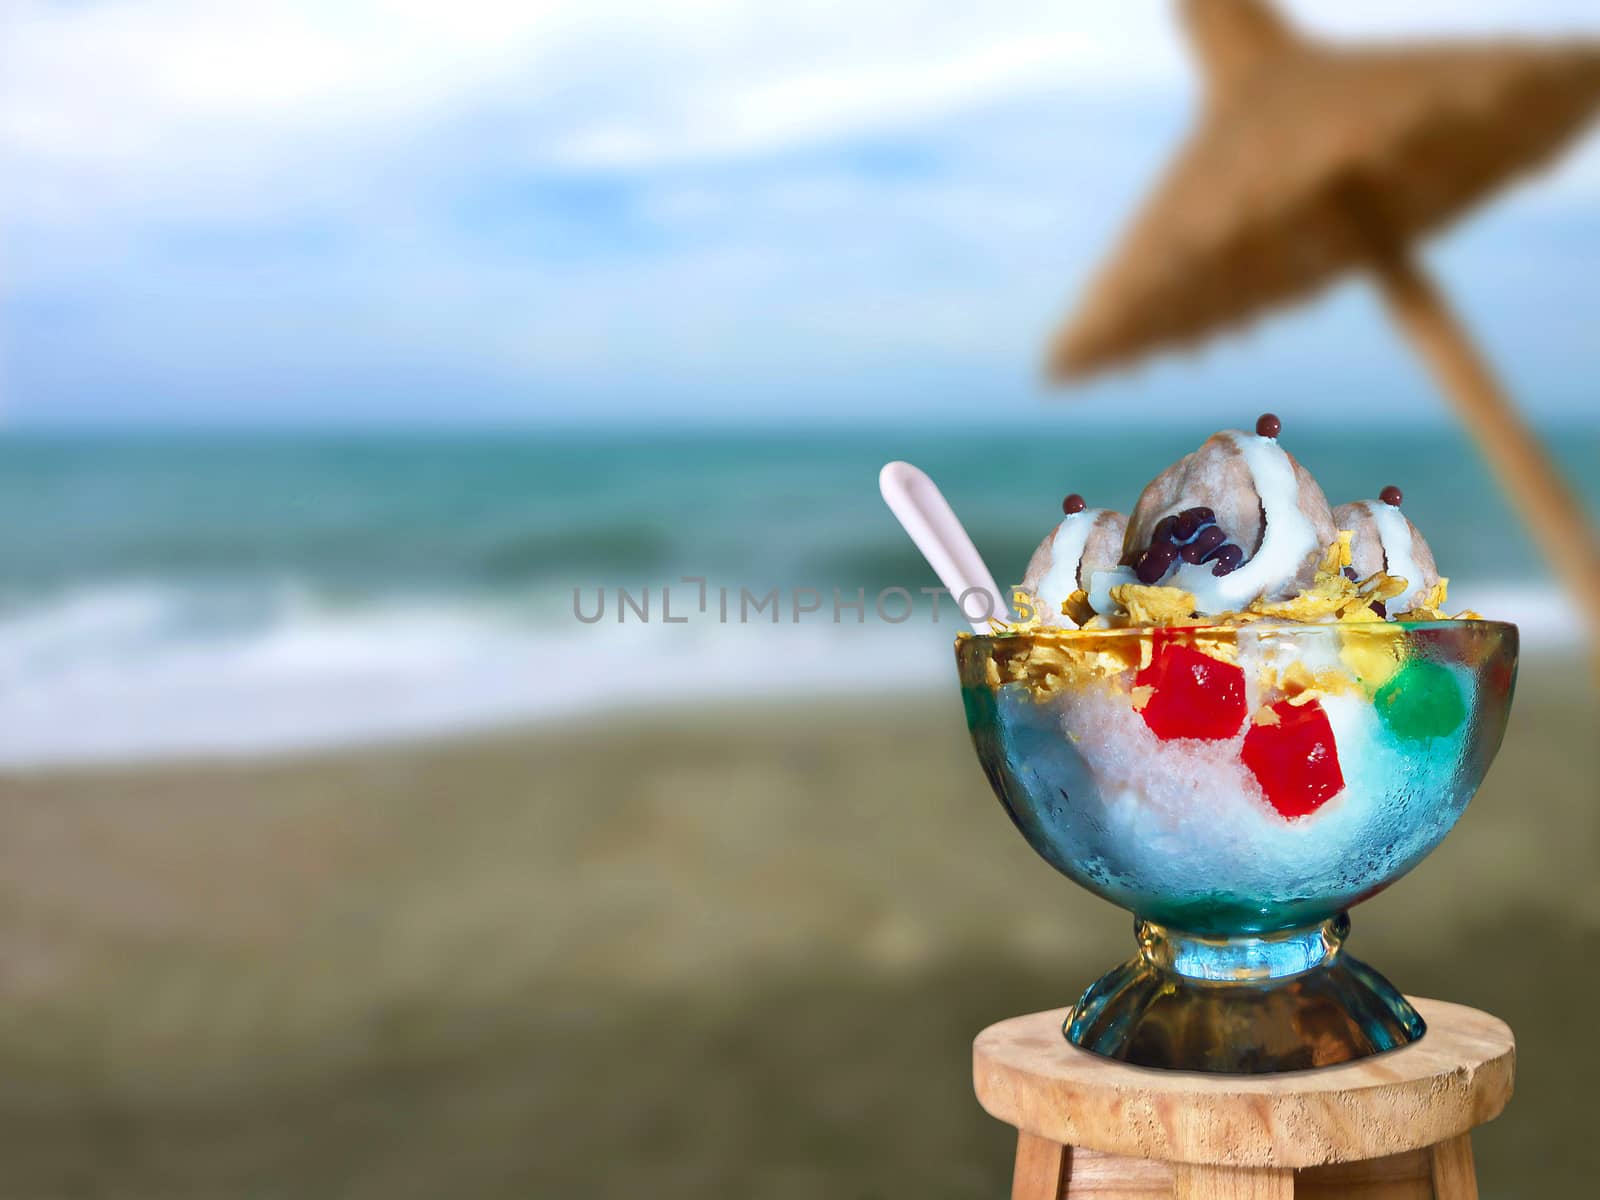 A tasty ice cream dessert shot in a beach on a hot summer day.